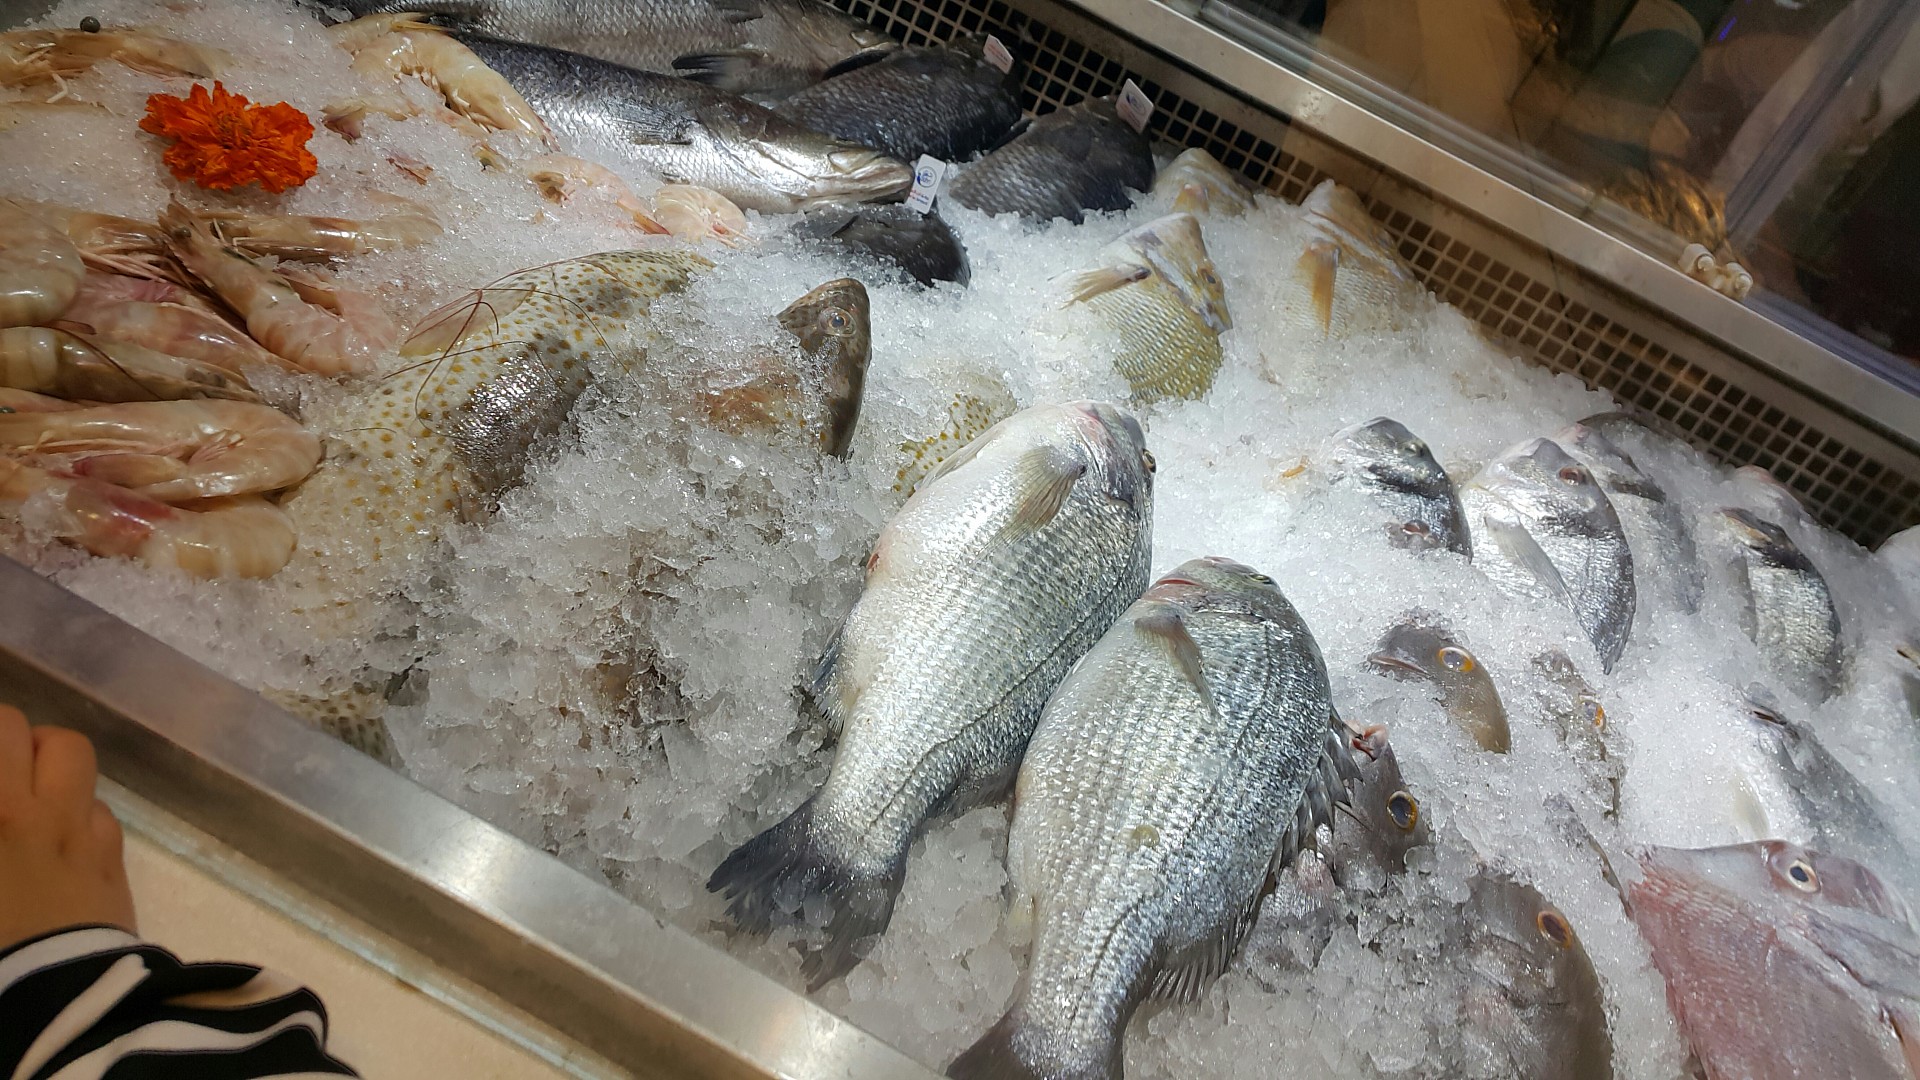 Fresh local seafood 👍 @ مطعم بانوش العرب - البحرين